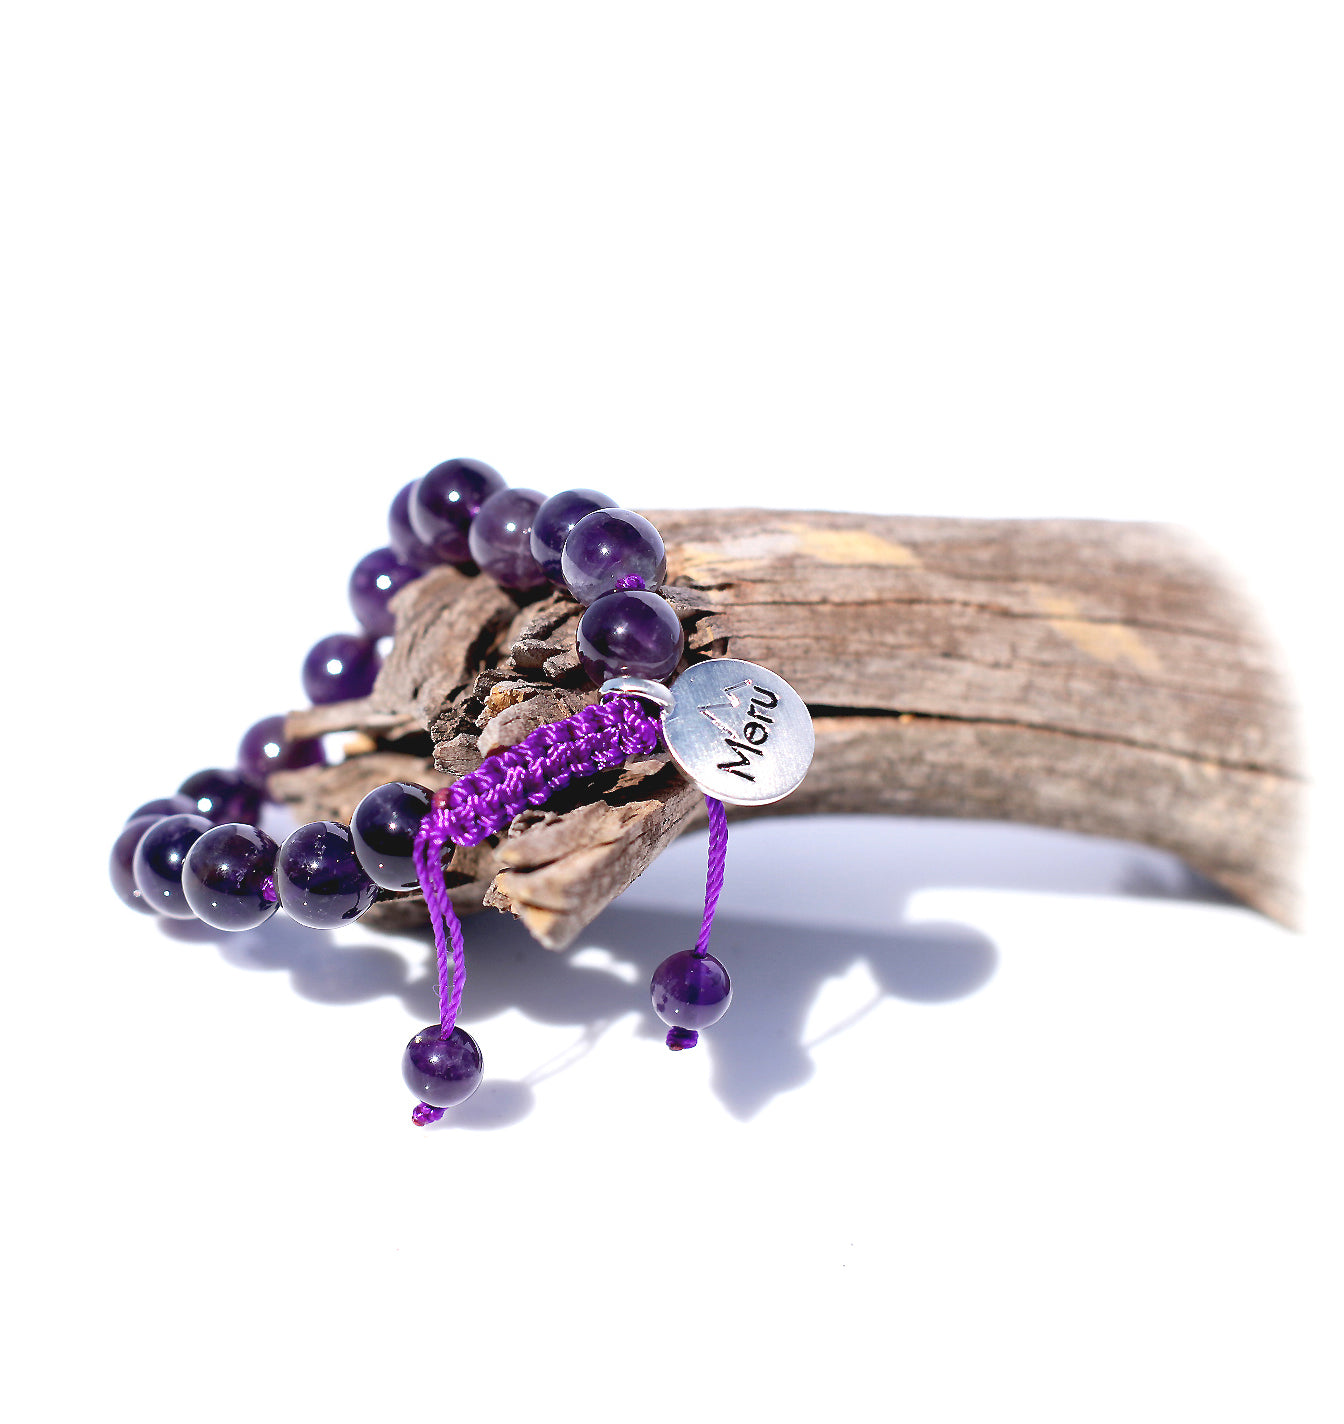 Handmade with Love - Premium Mala Beads Necklace & Bracelets– MeruBeads